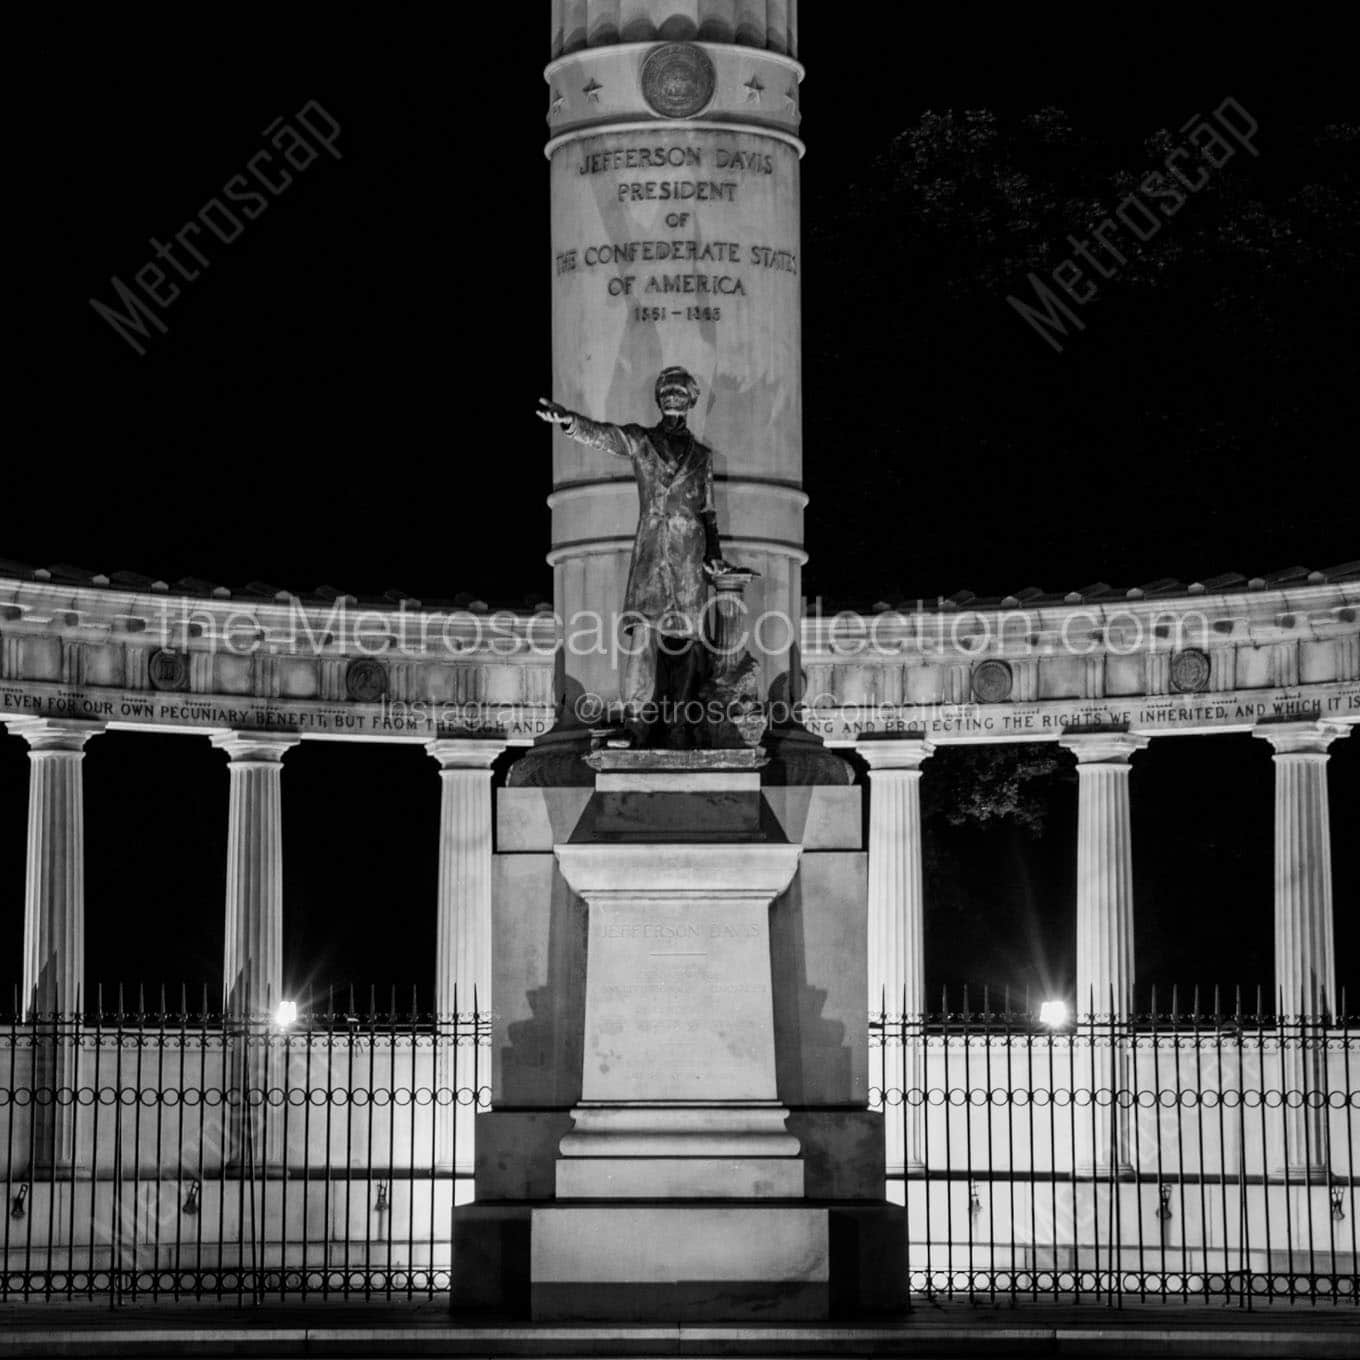 jefferson davis monument at night Black & White Office Art